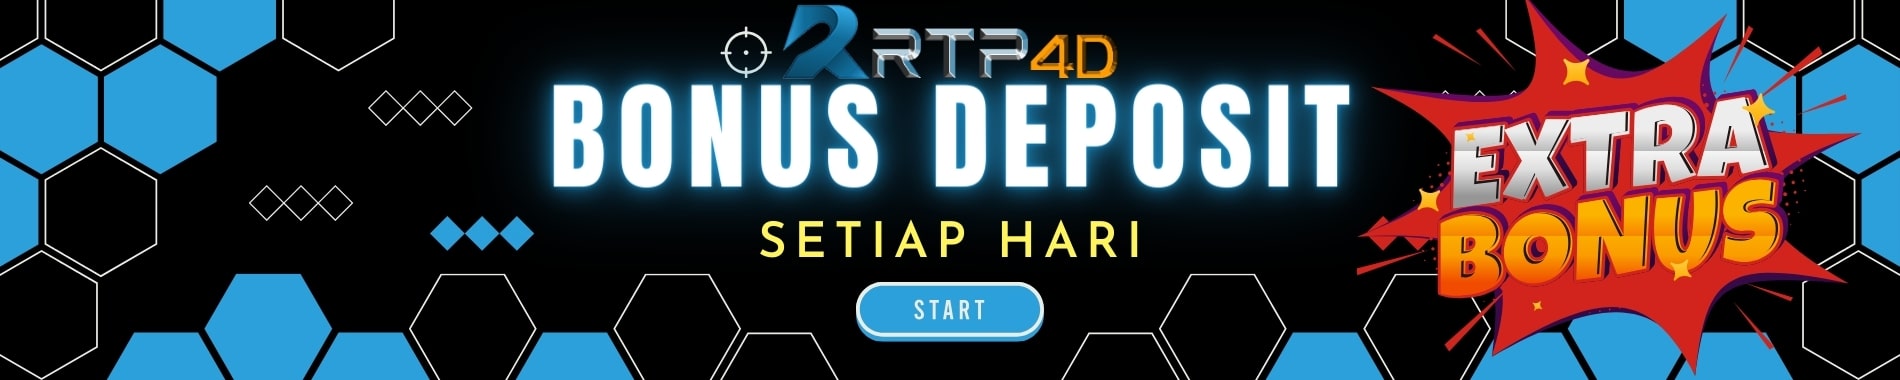 RTP4D Platform Slot Deposit Pulsa Tanpa Potongan